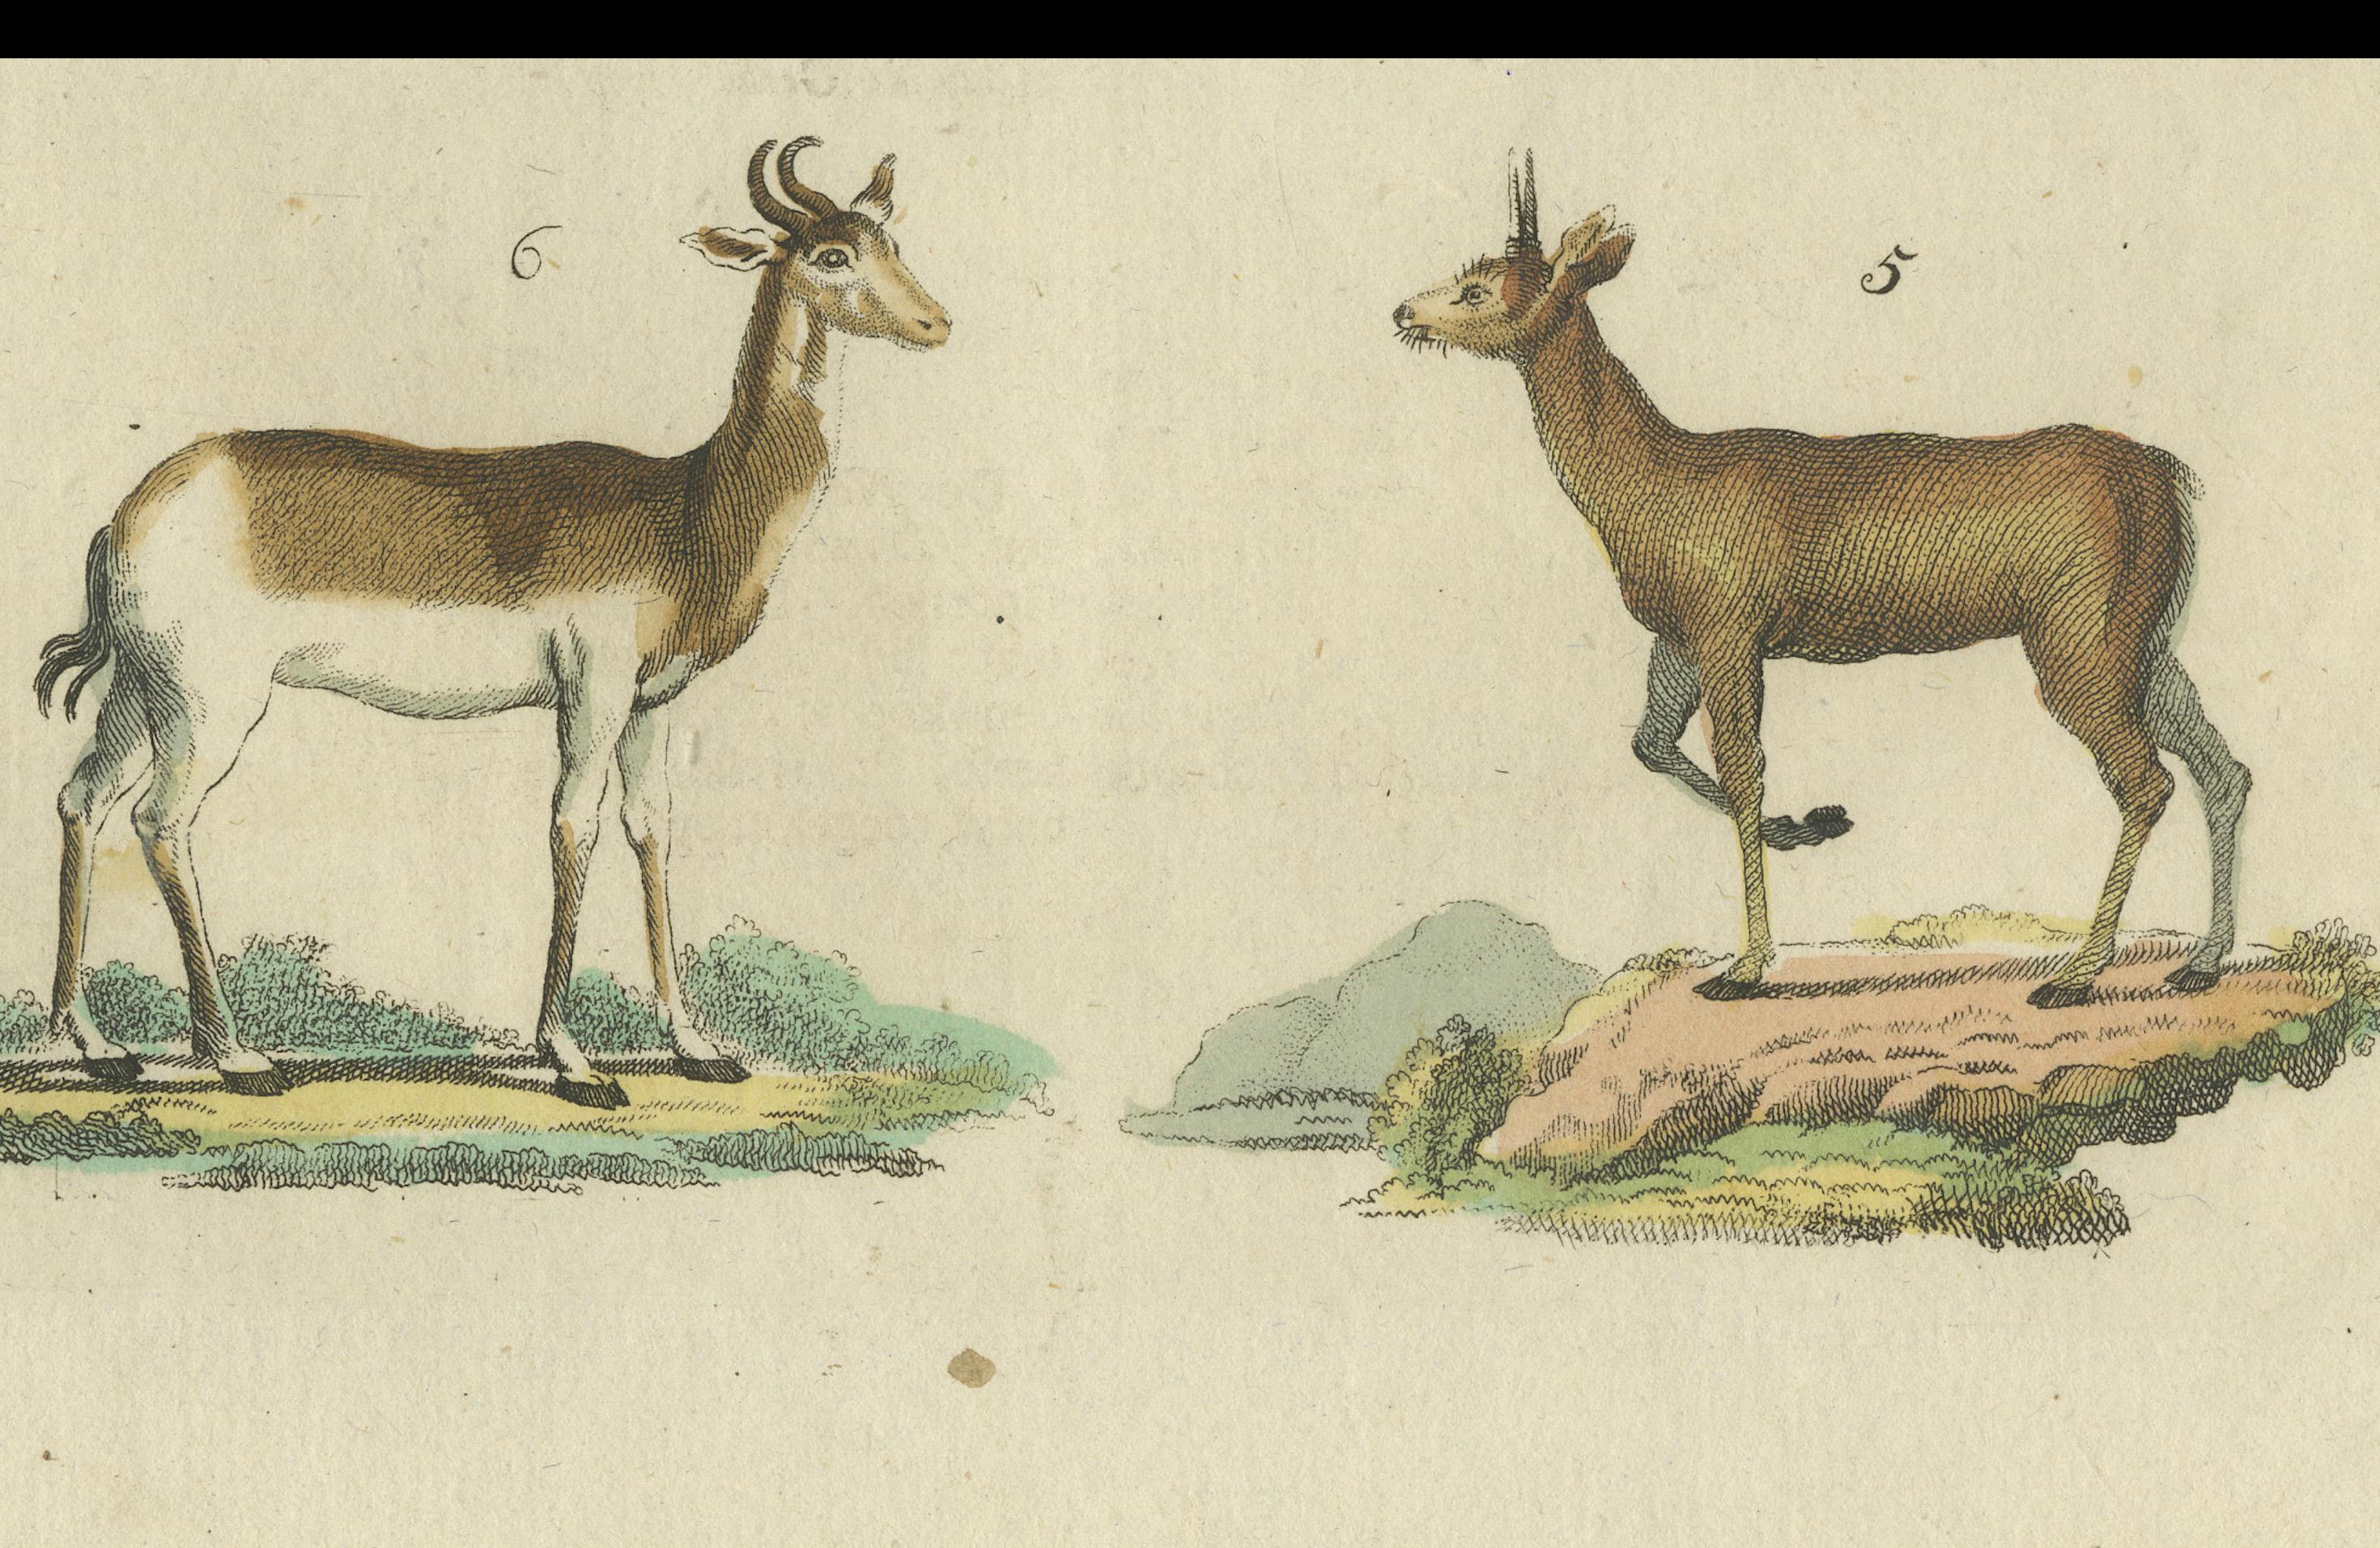 Paper Original Hand-Colored Antique Print of various Antelope Species, circa 1820 For Sale